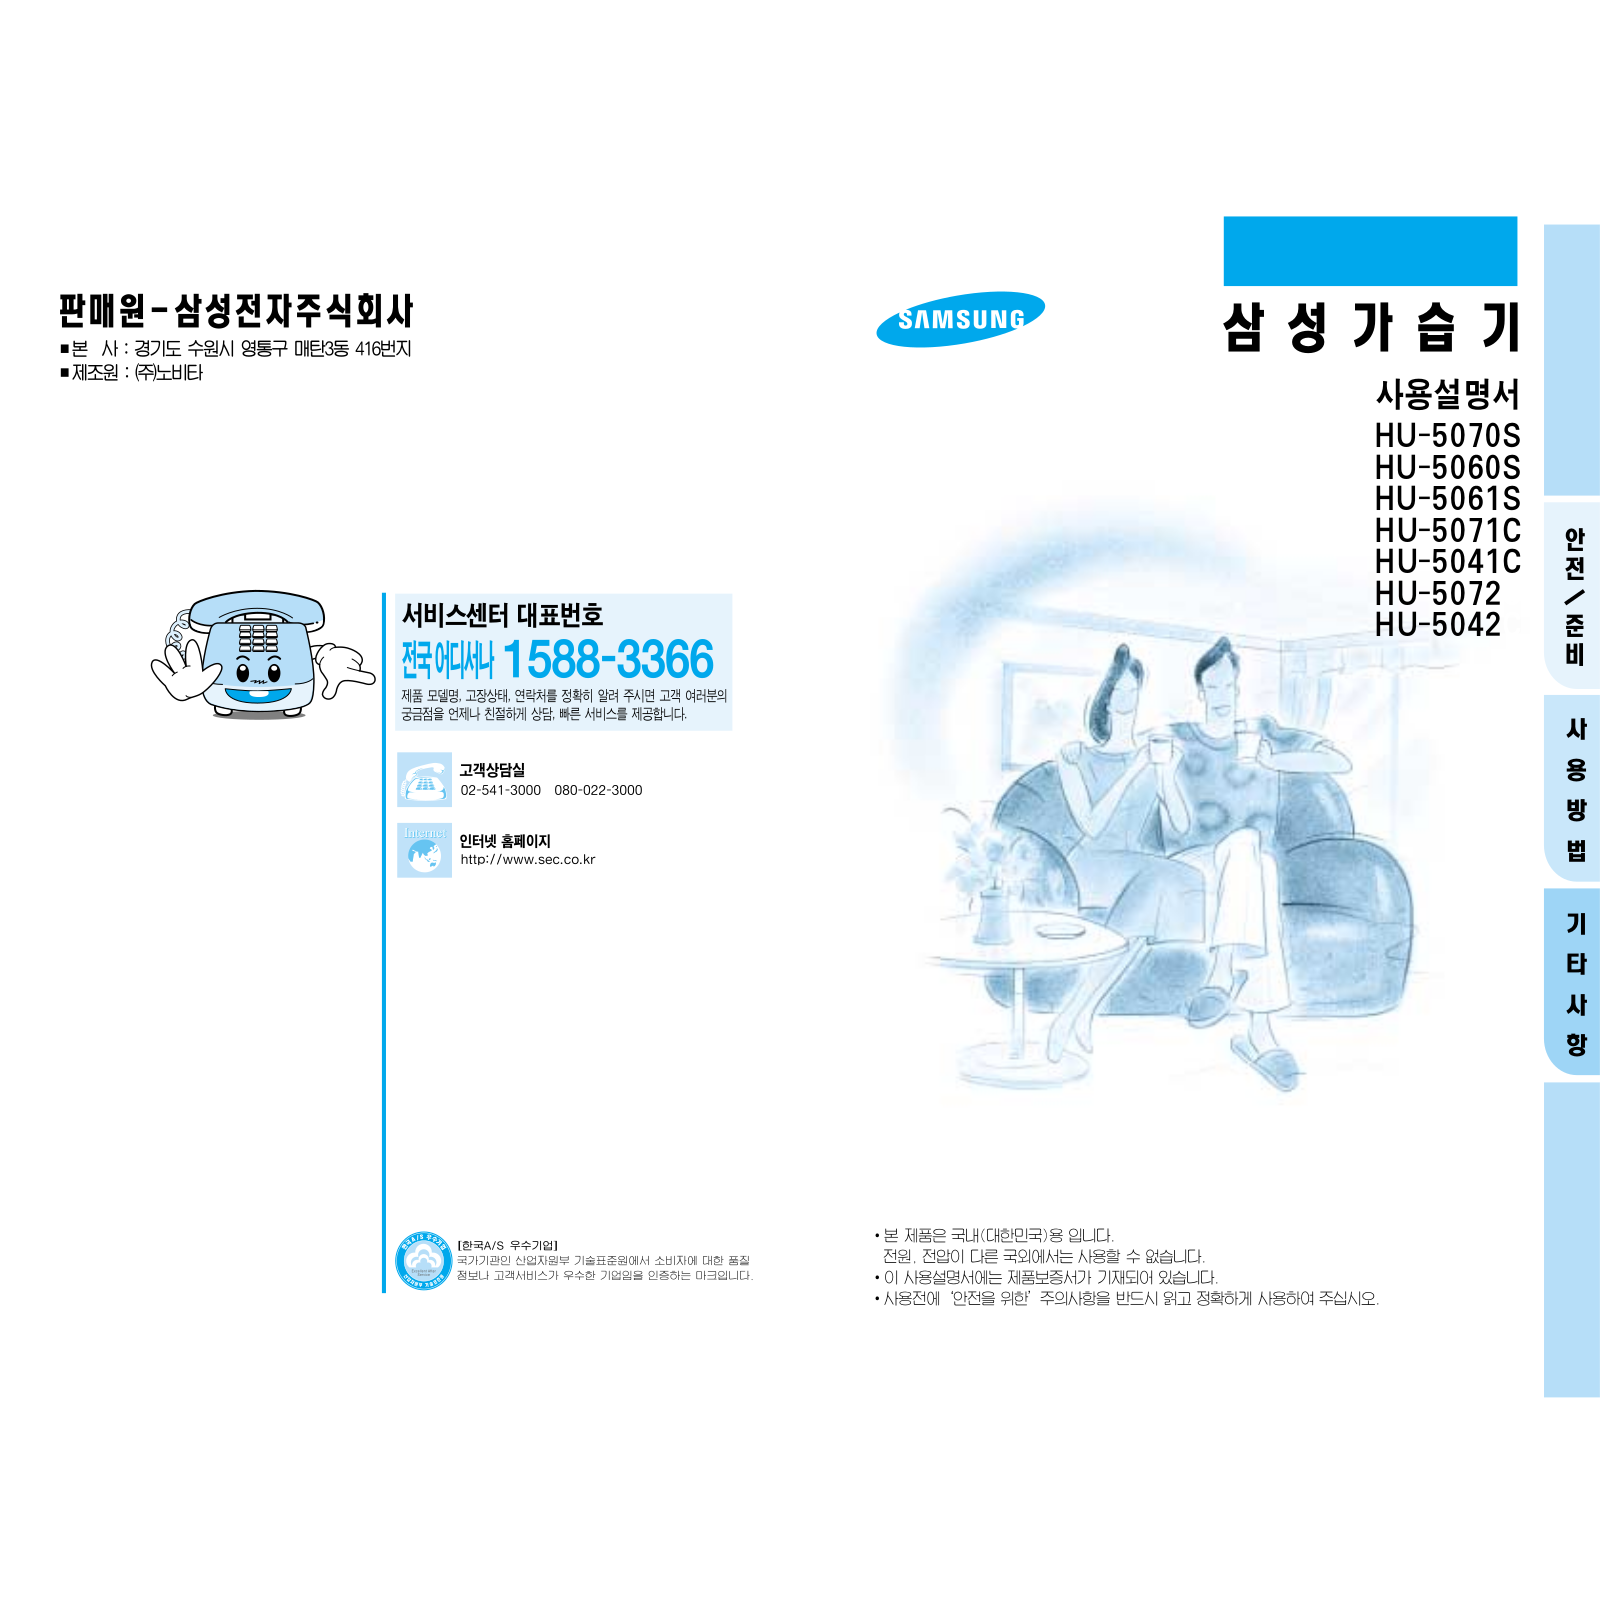 Samsung HU-5040S, HU-5043C User Manual